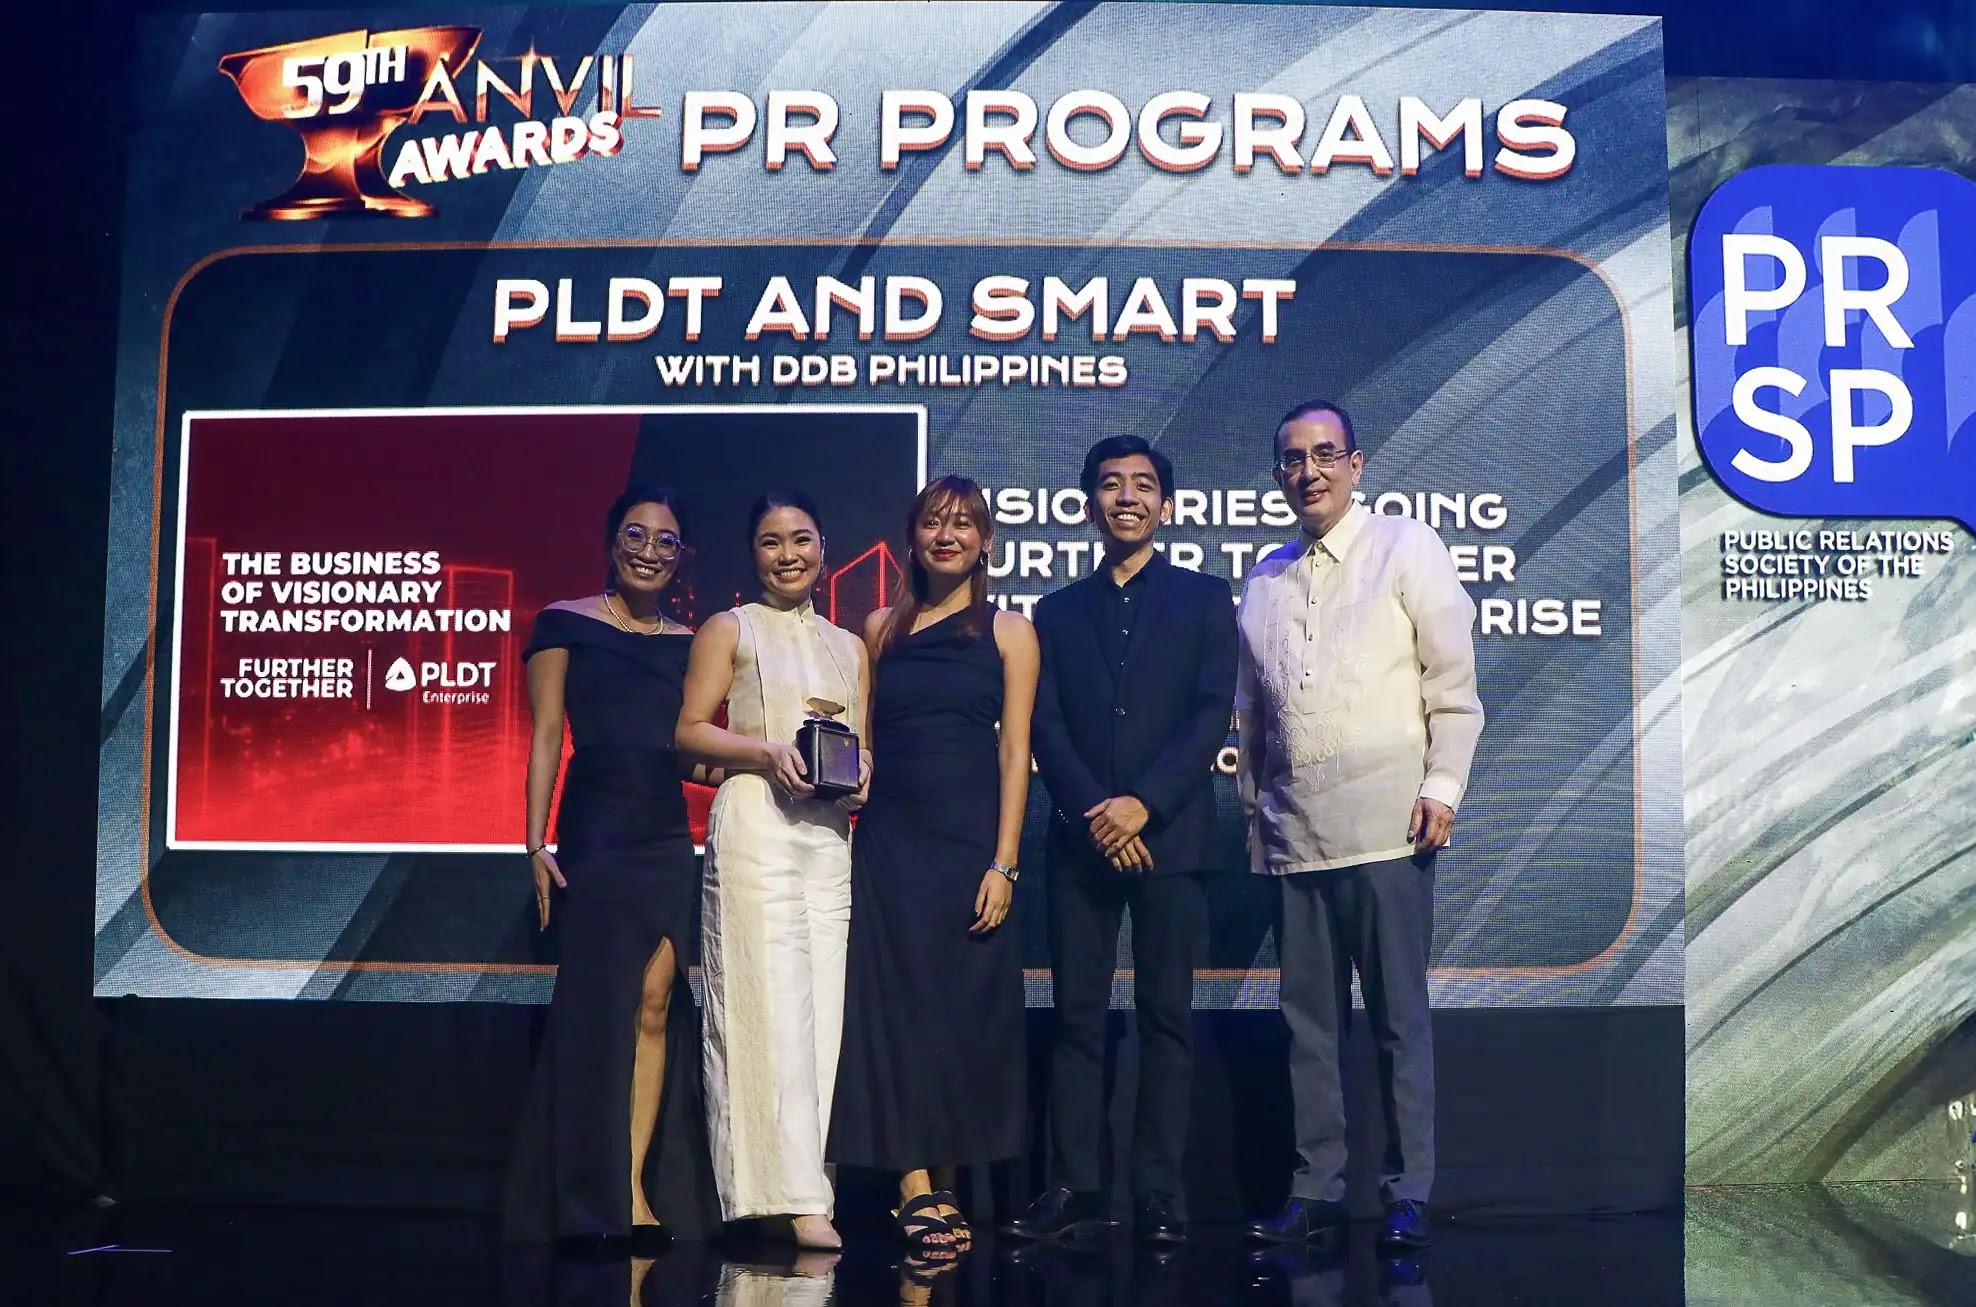 PLDT Enterprise Celebrates their Silver Anvil Award for the VISIONARIES Campaign